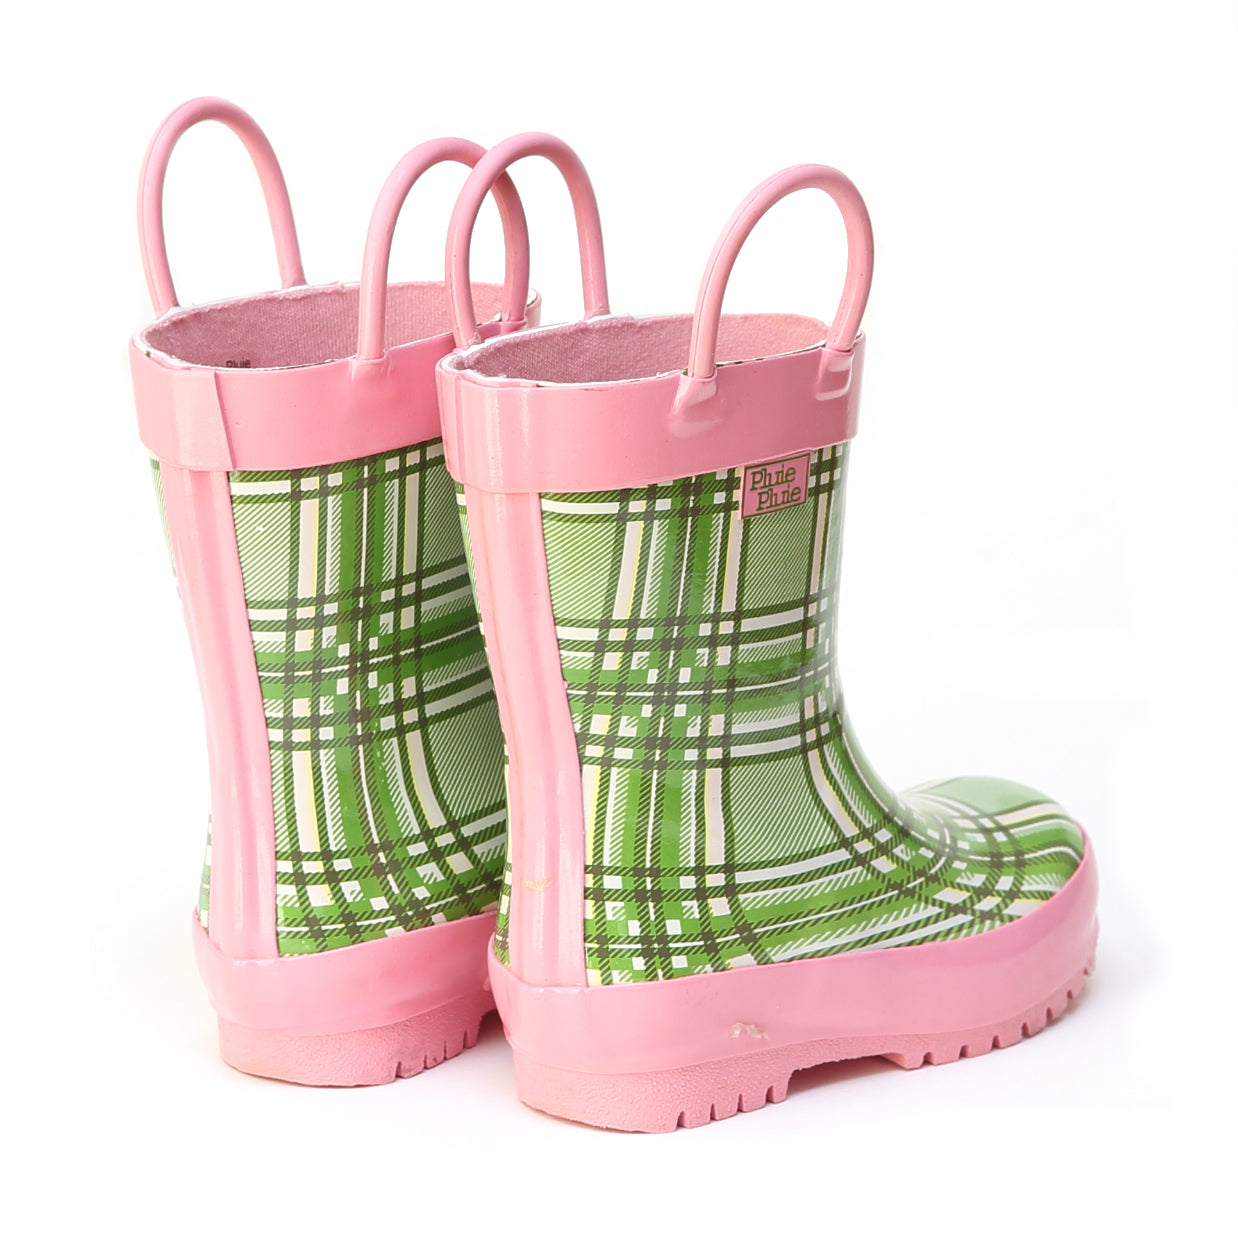 Pluie Pluie Girls Green Plaid Rain Boot